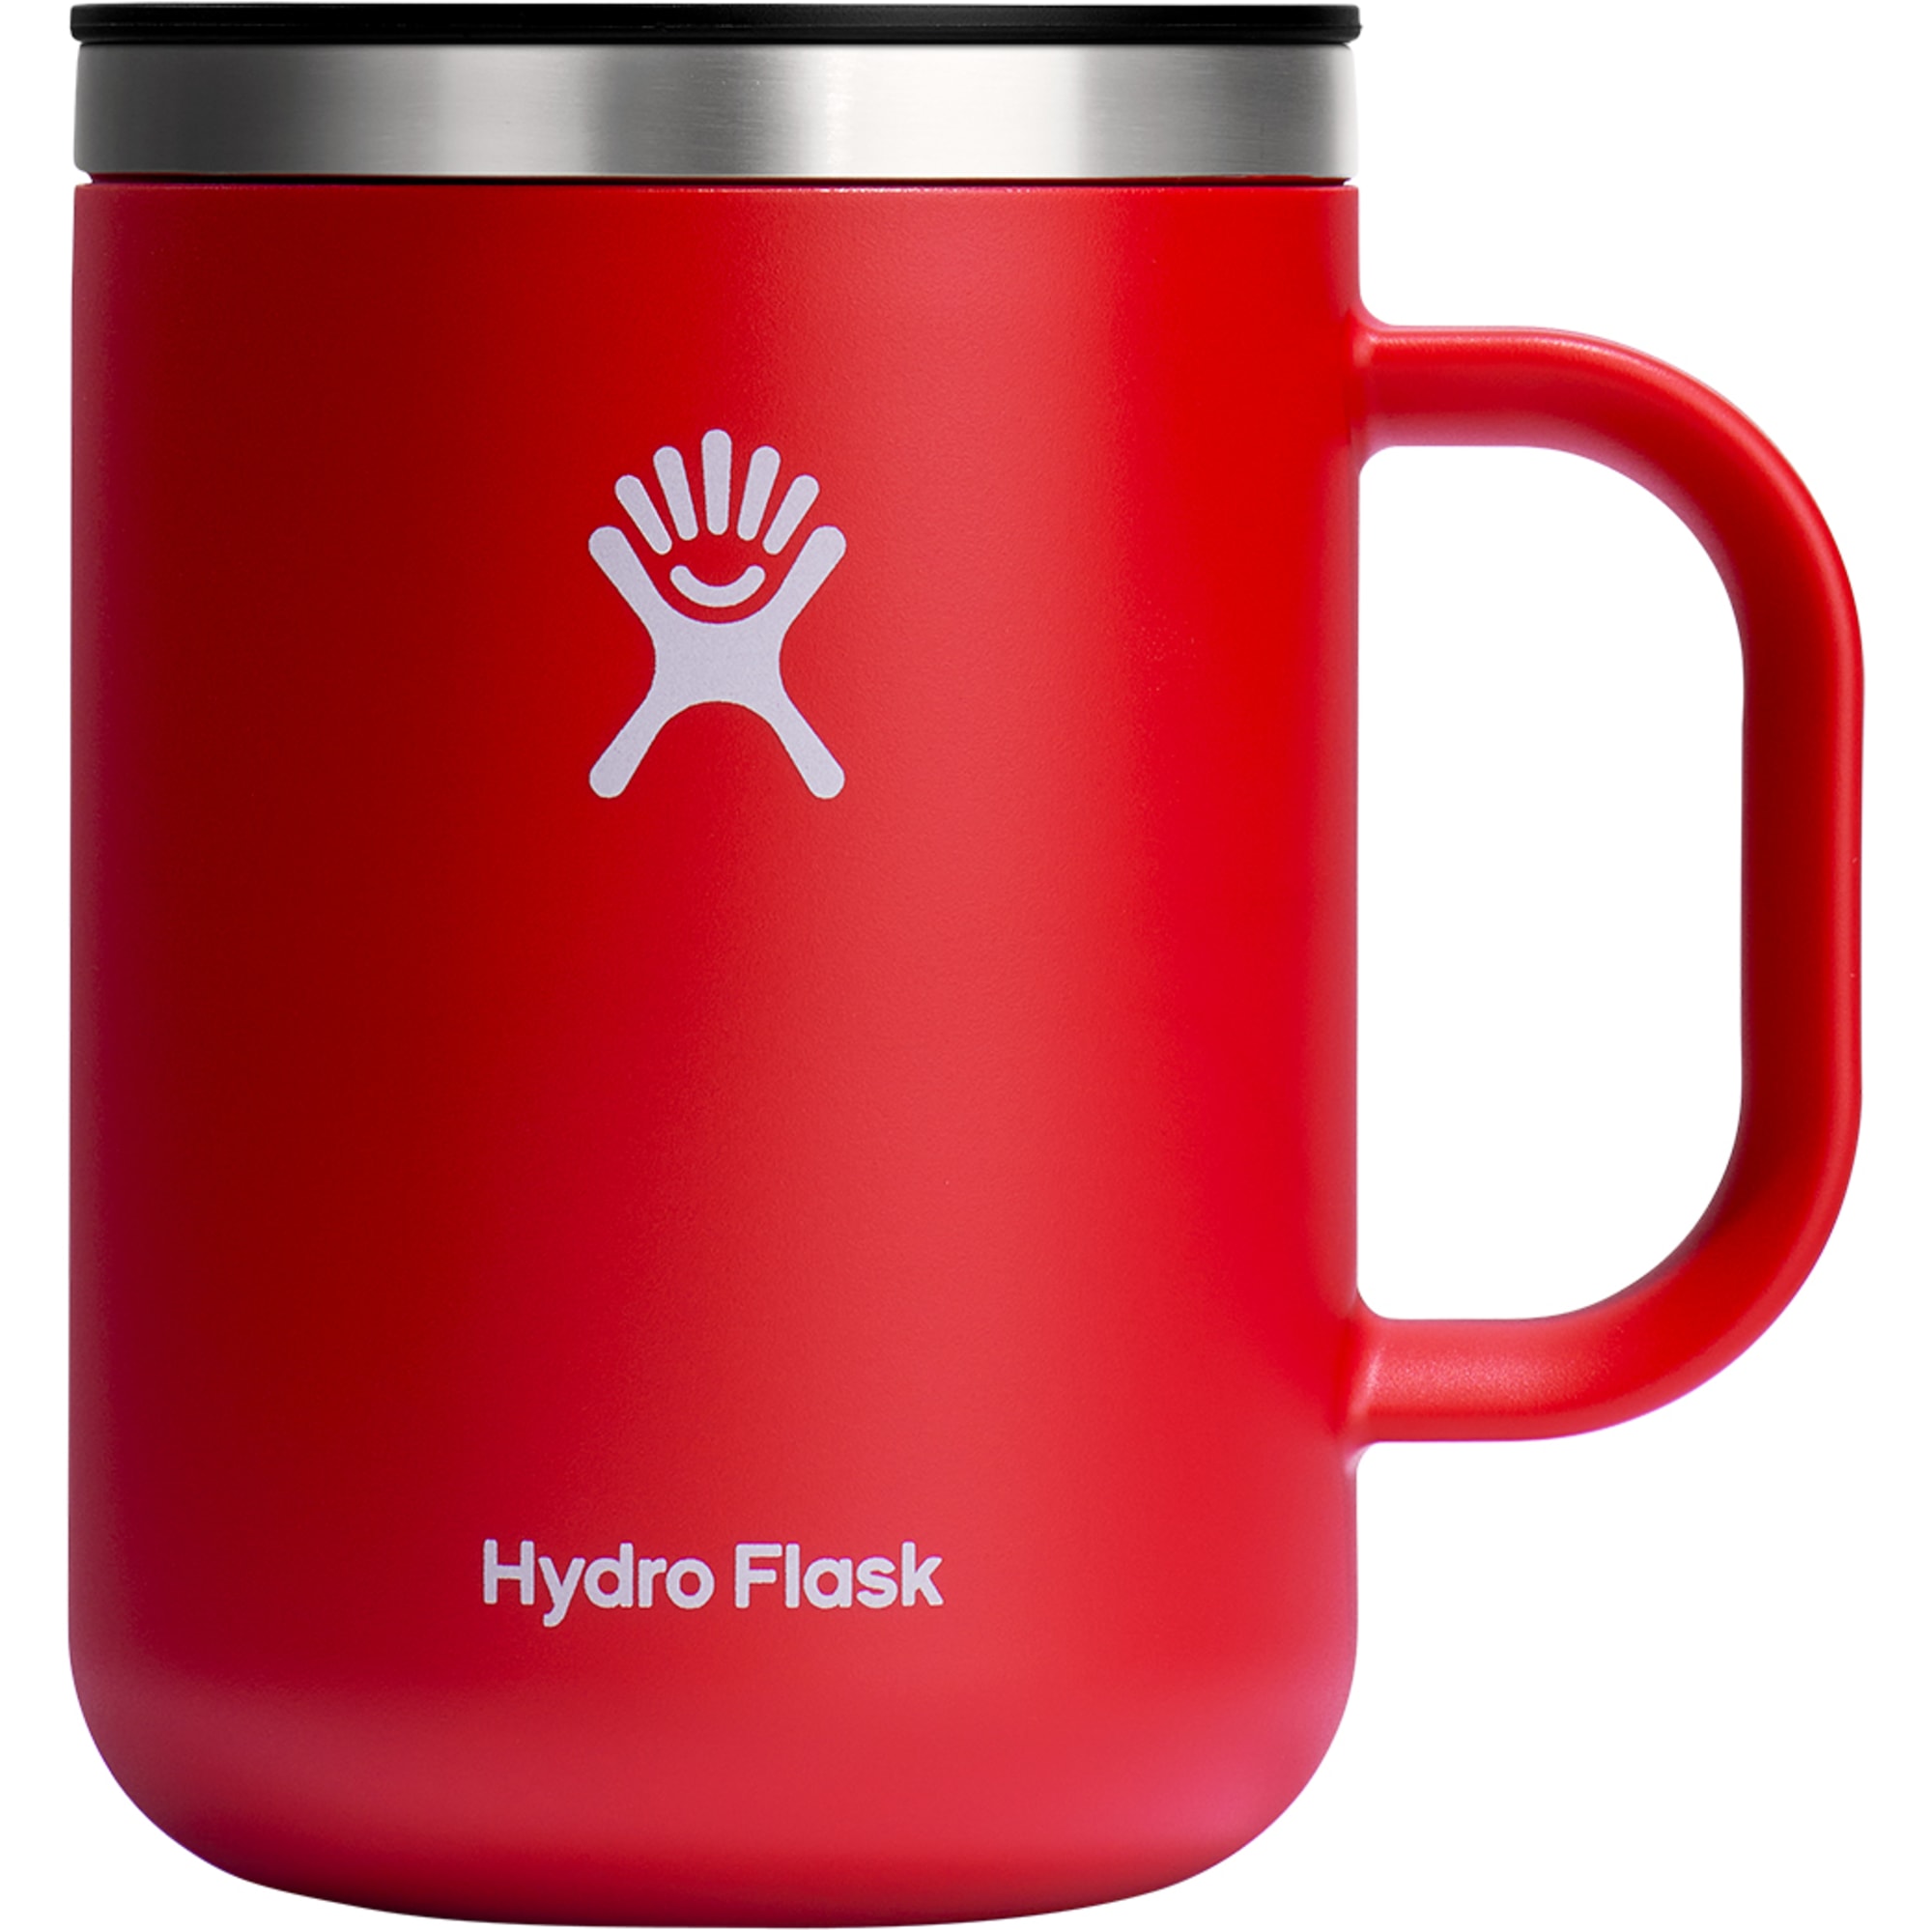 Hydro Flask Mug - Stainless Steel 12 Oz Tea Coffee Travel Mug